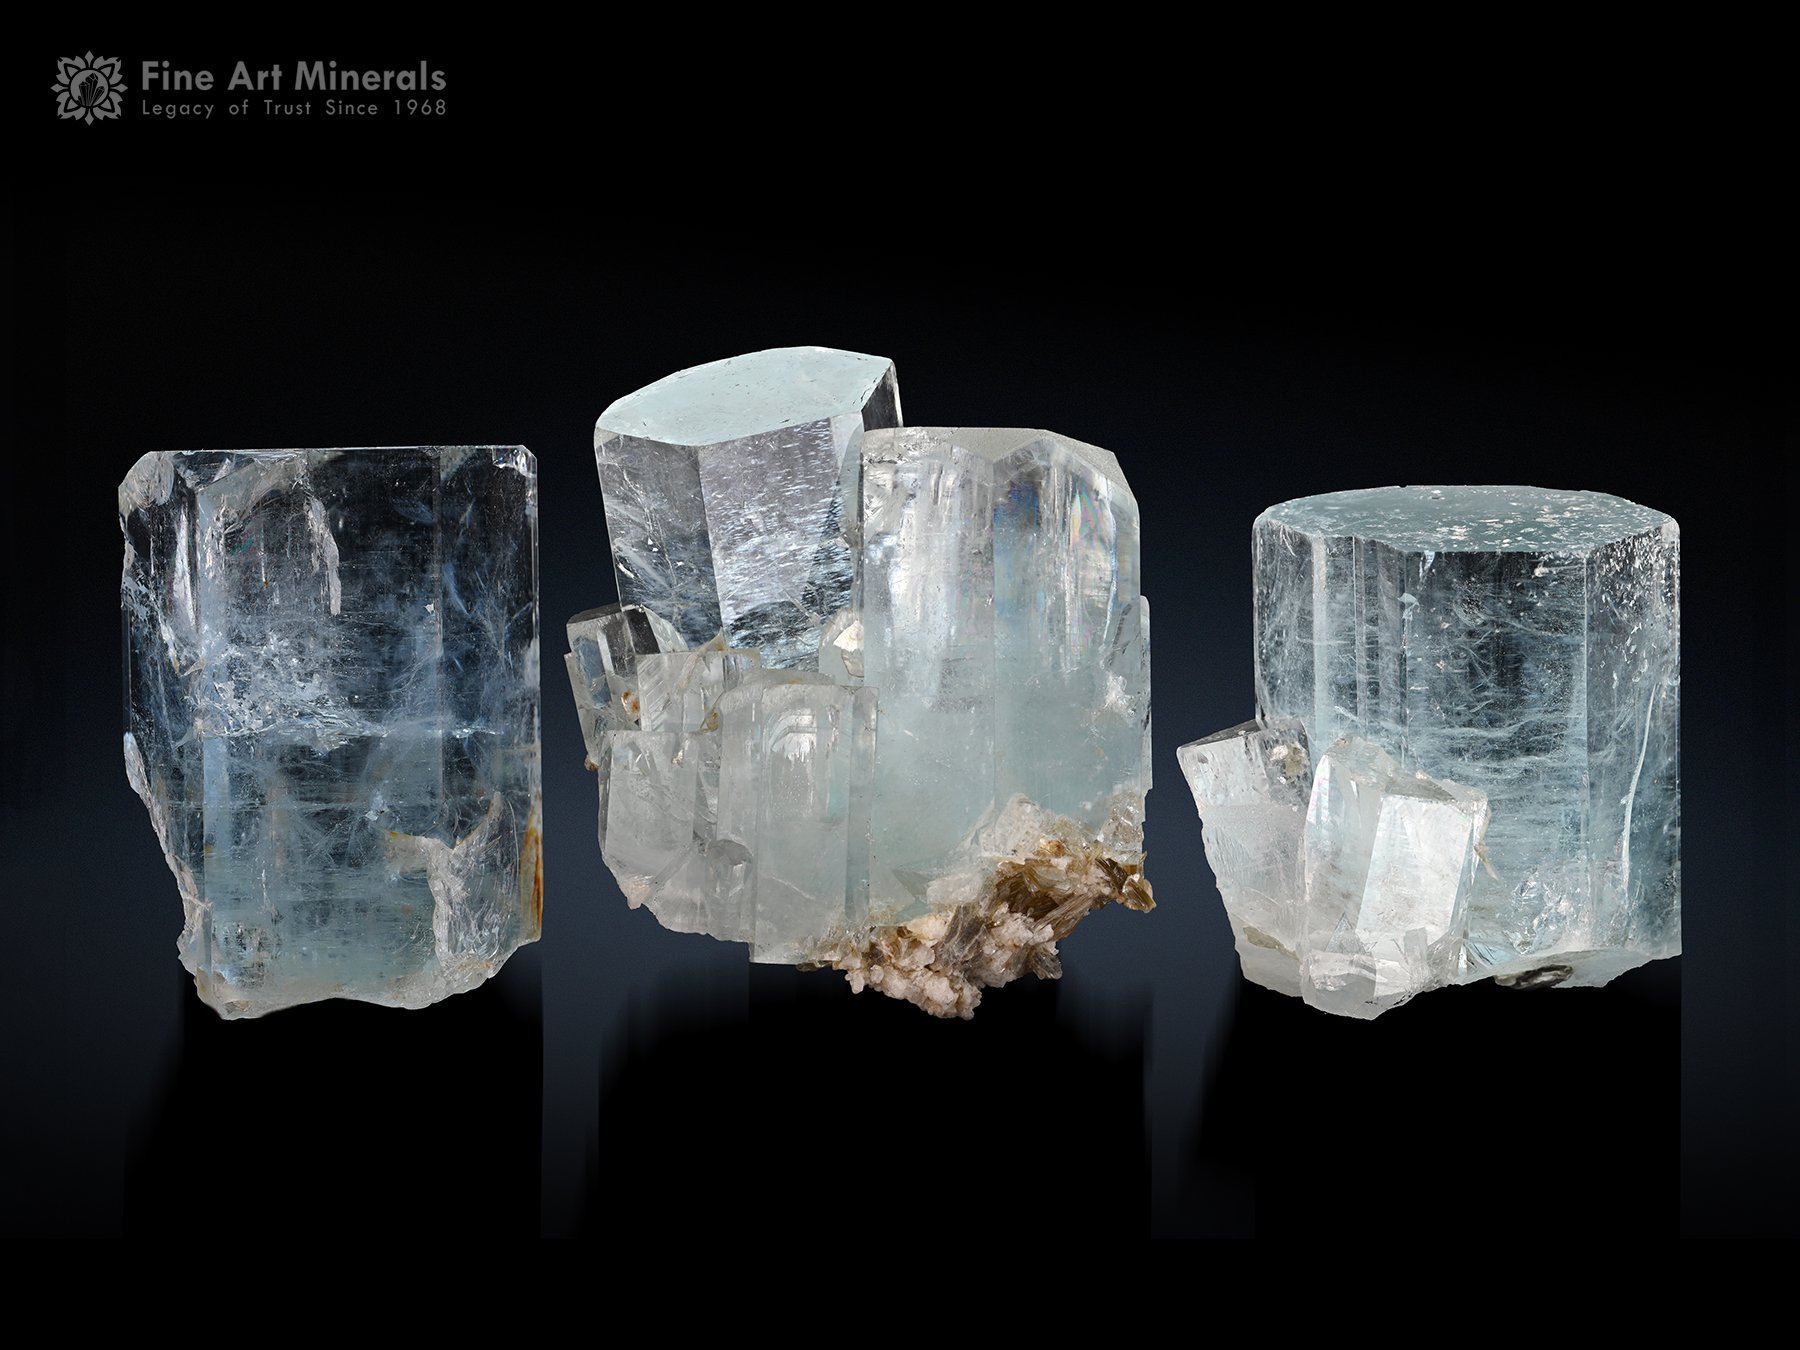 Aquamarine crystals Lot from Pakistan